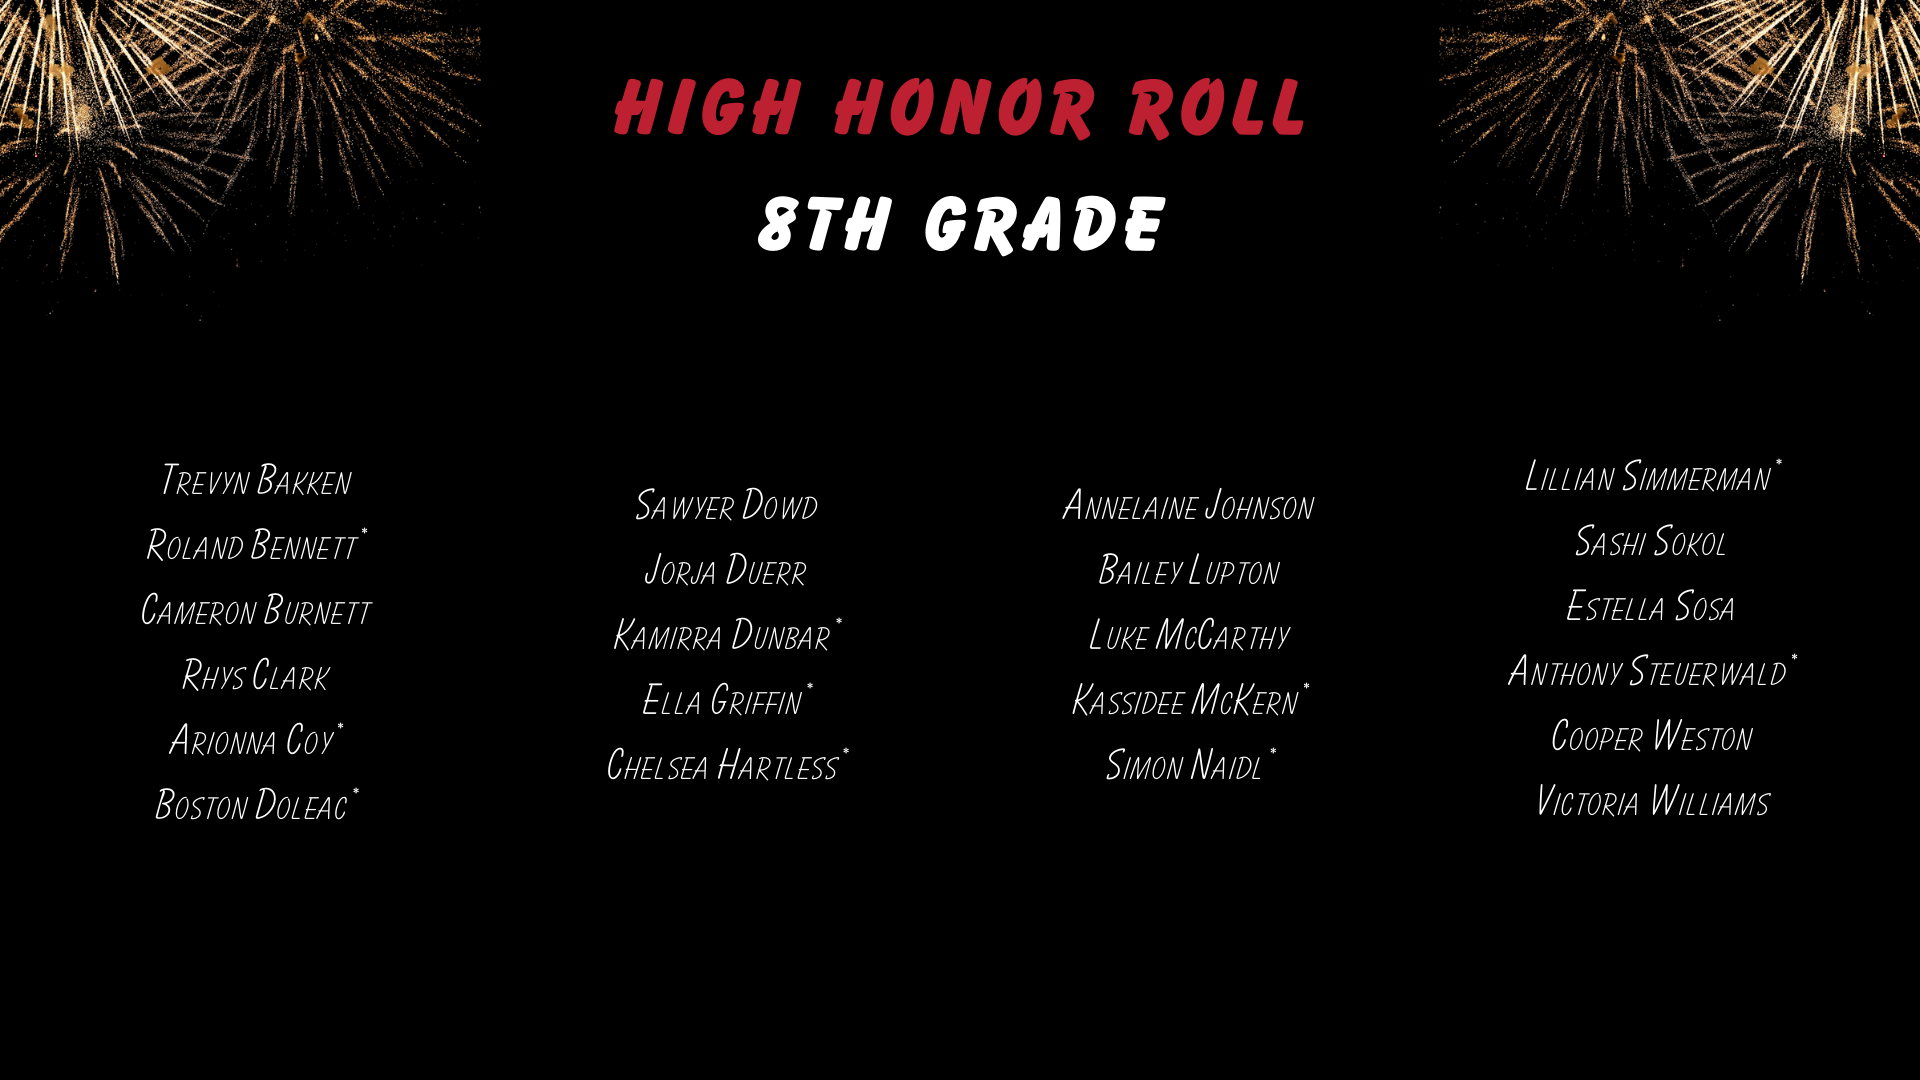 High Honor Roll 8th grade